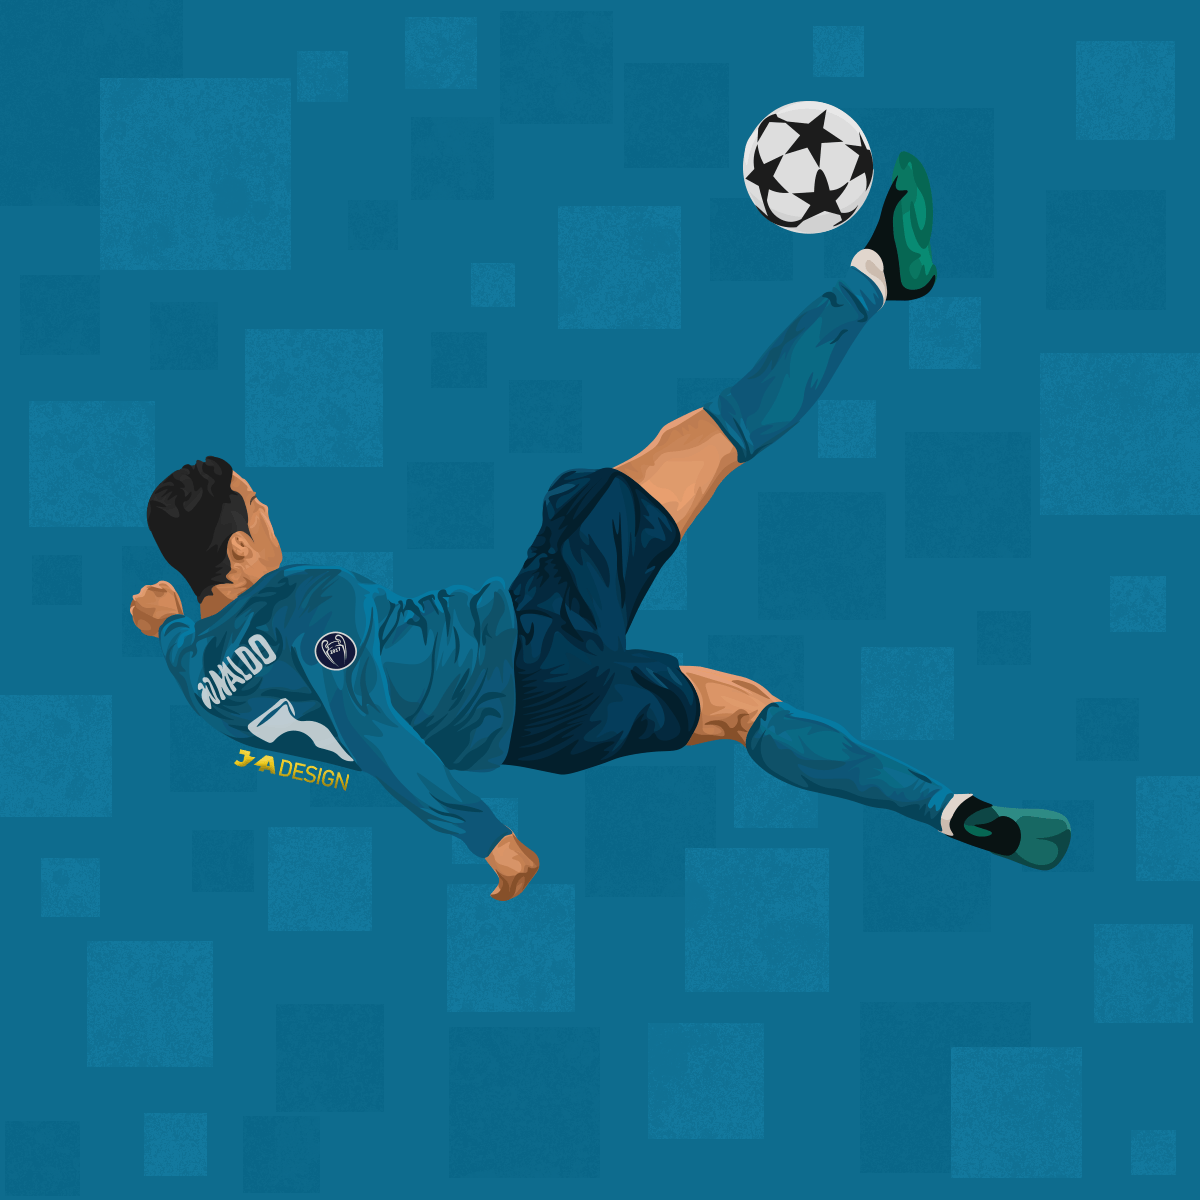 Cristiano Ronaldo Cartoons Behance Wallpapers - Wallpaper Cave